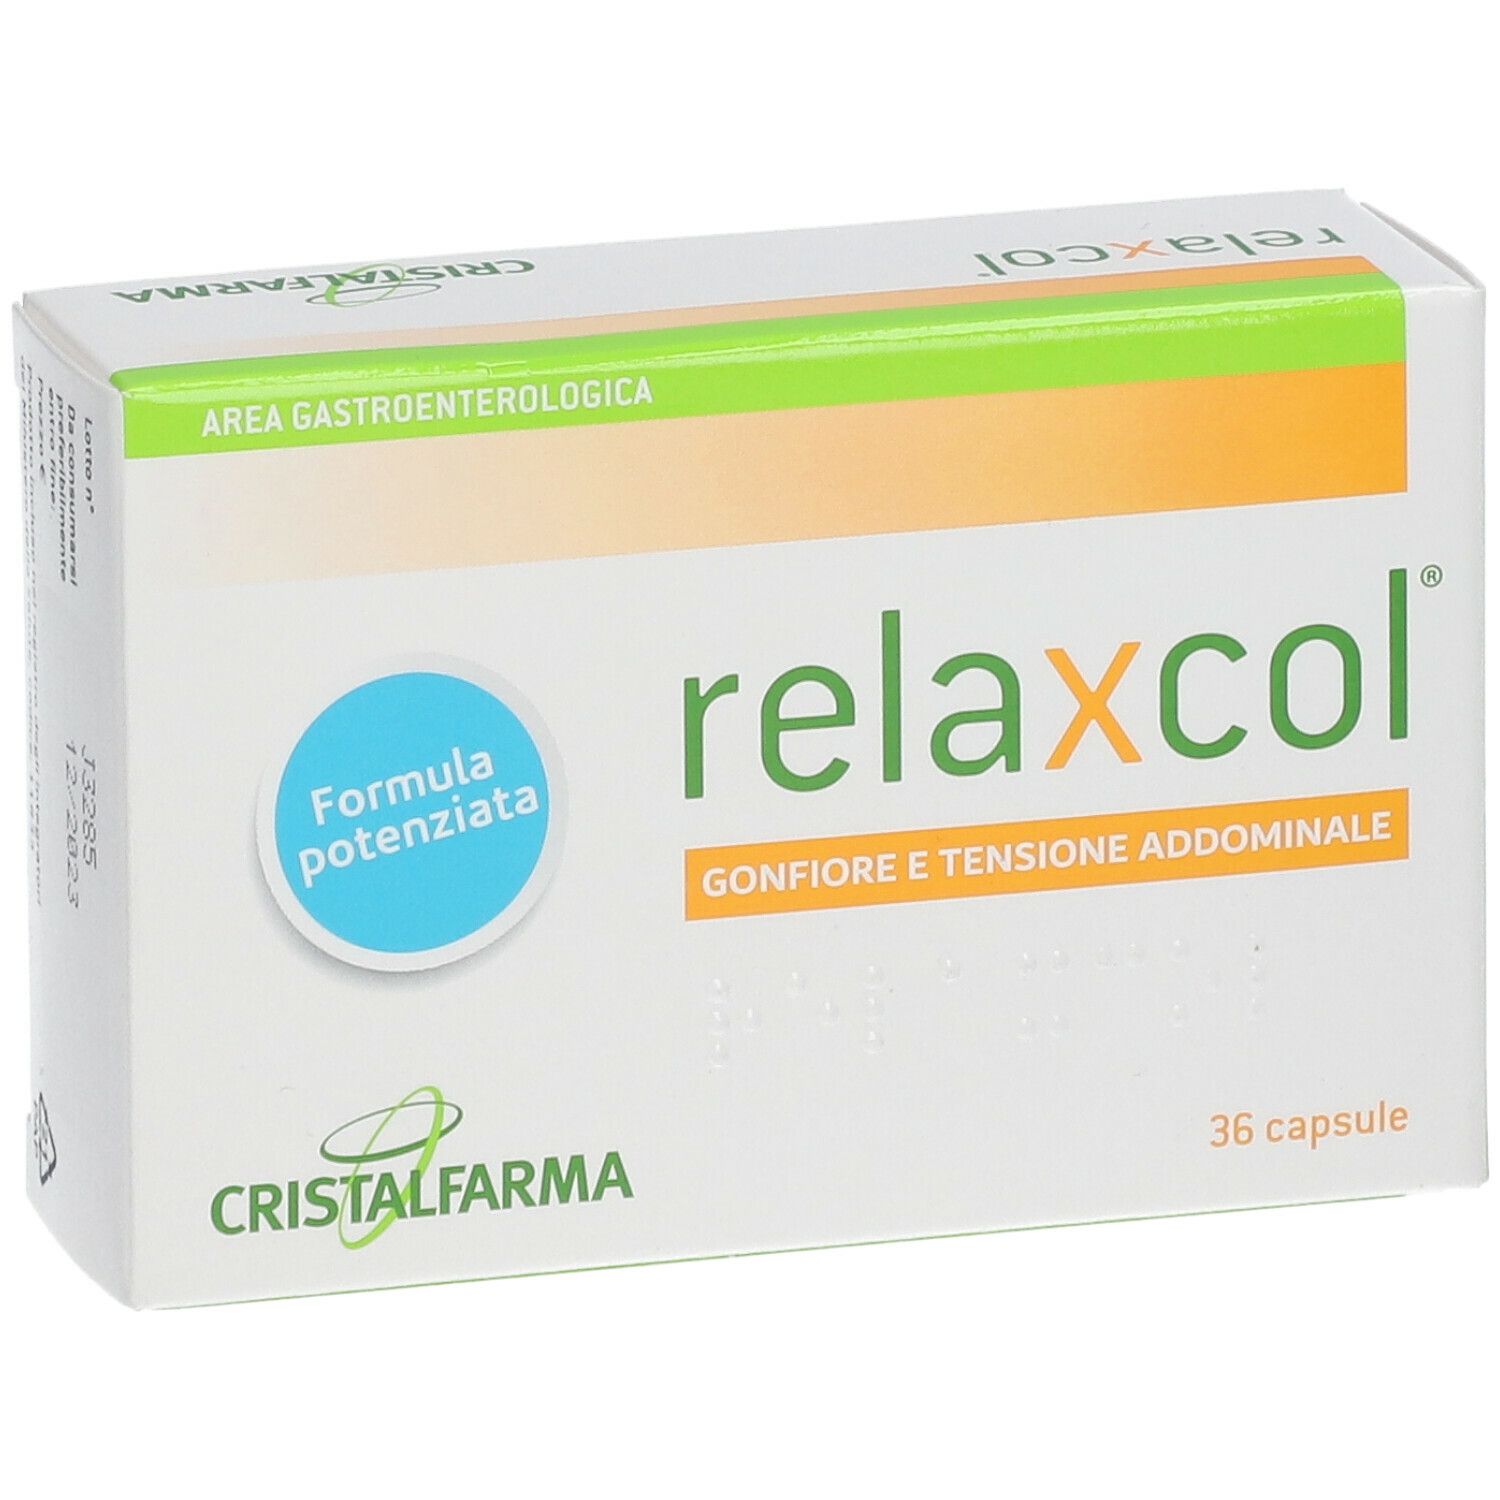 relaxcol® capsule